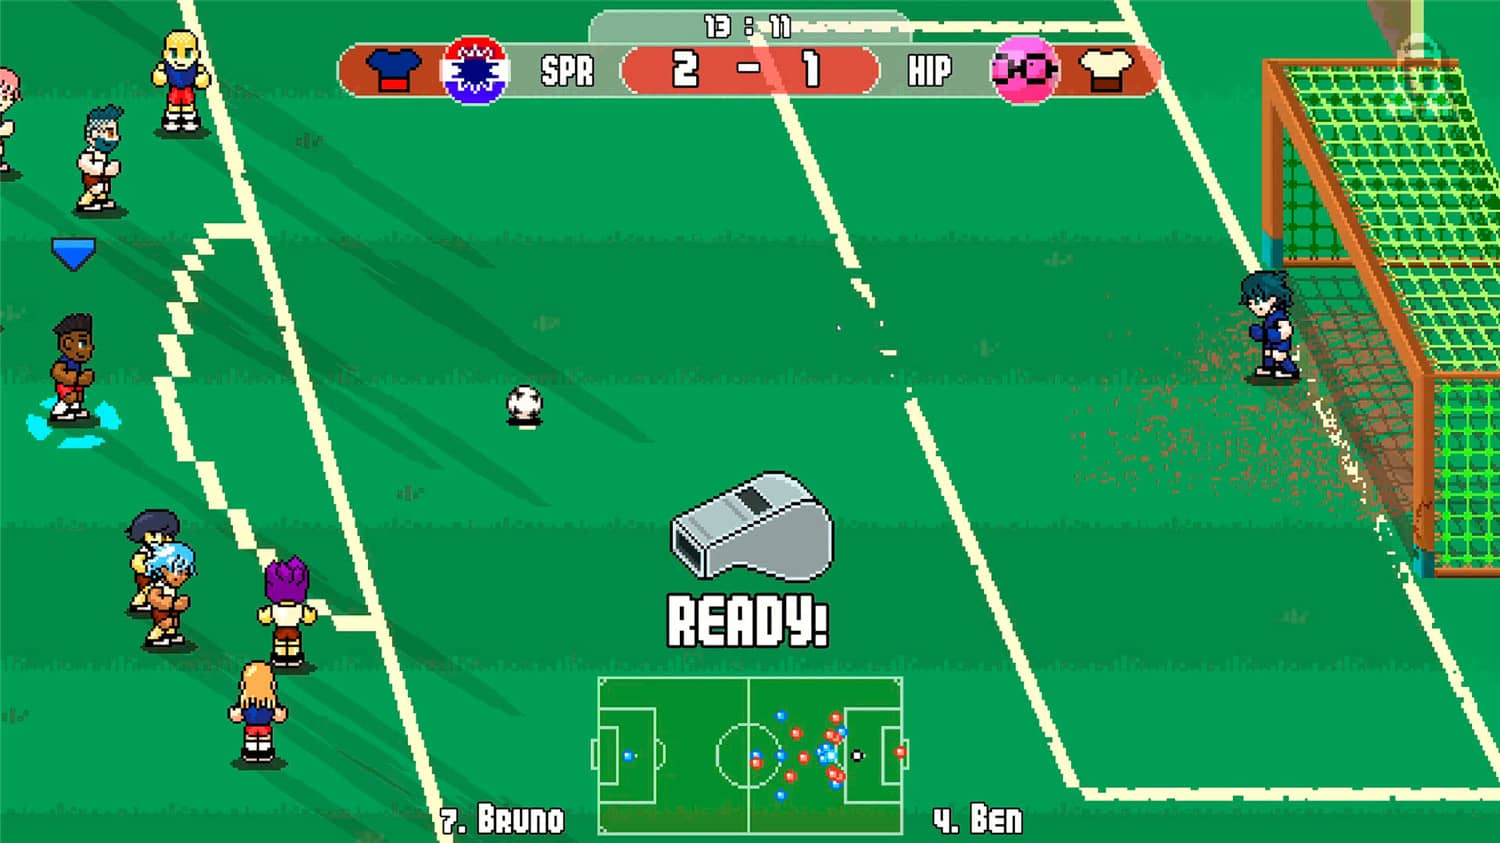 像素世界杯足球赛：终极版/Pixel Cup Soccer - Ultimate Edition-6